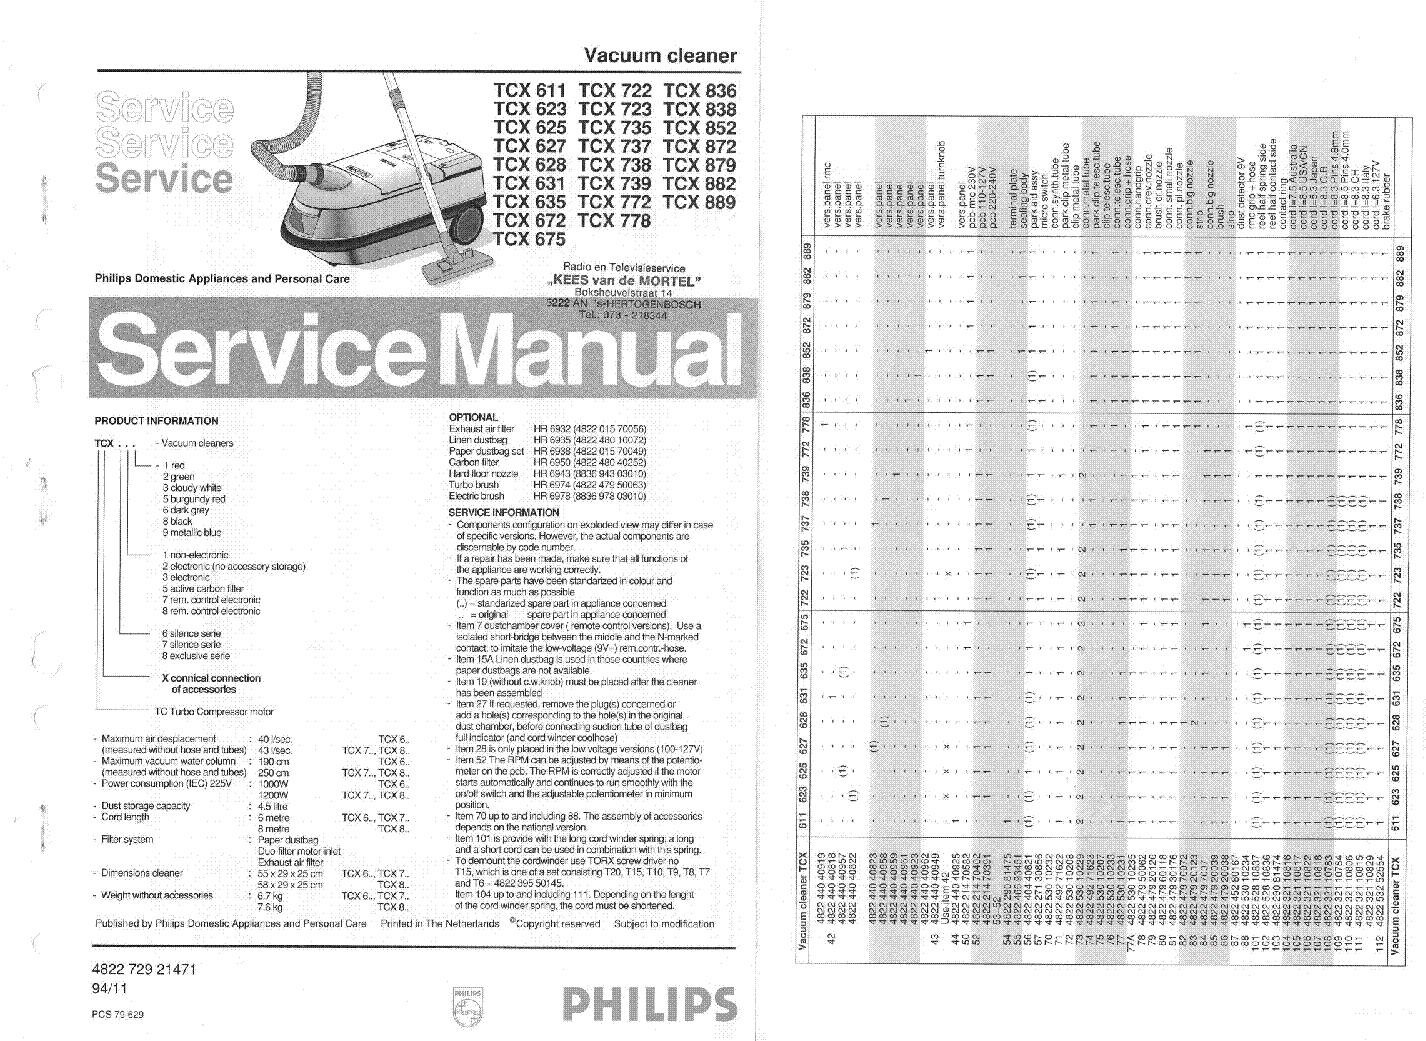 PHILIPS TCX611 TCX623 TCX625 TCX627 TCX628 TCX631 TCX635 TCX672 TCX675 TCX722 TCX723 TCX735 TCX737 TCX738 TCX739 TCX772 TCX778 TCX836 TCX838 TCX852 TCX872 TCX879 TCX882 TCX889 SM service manual (1st page)